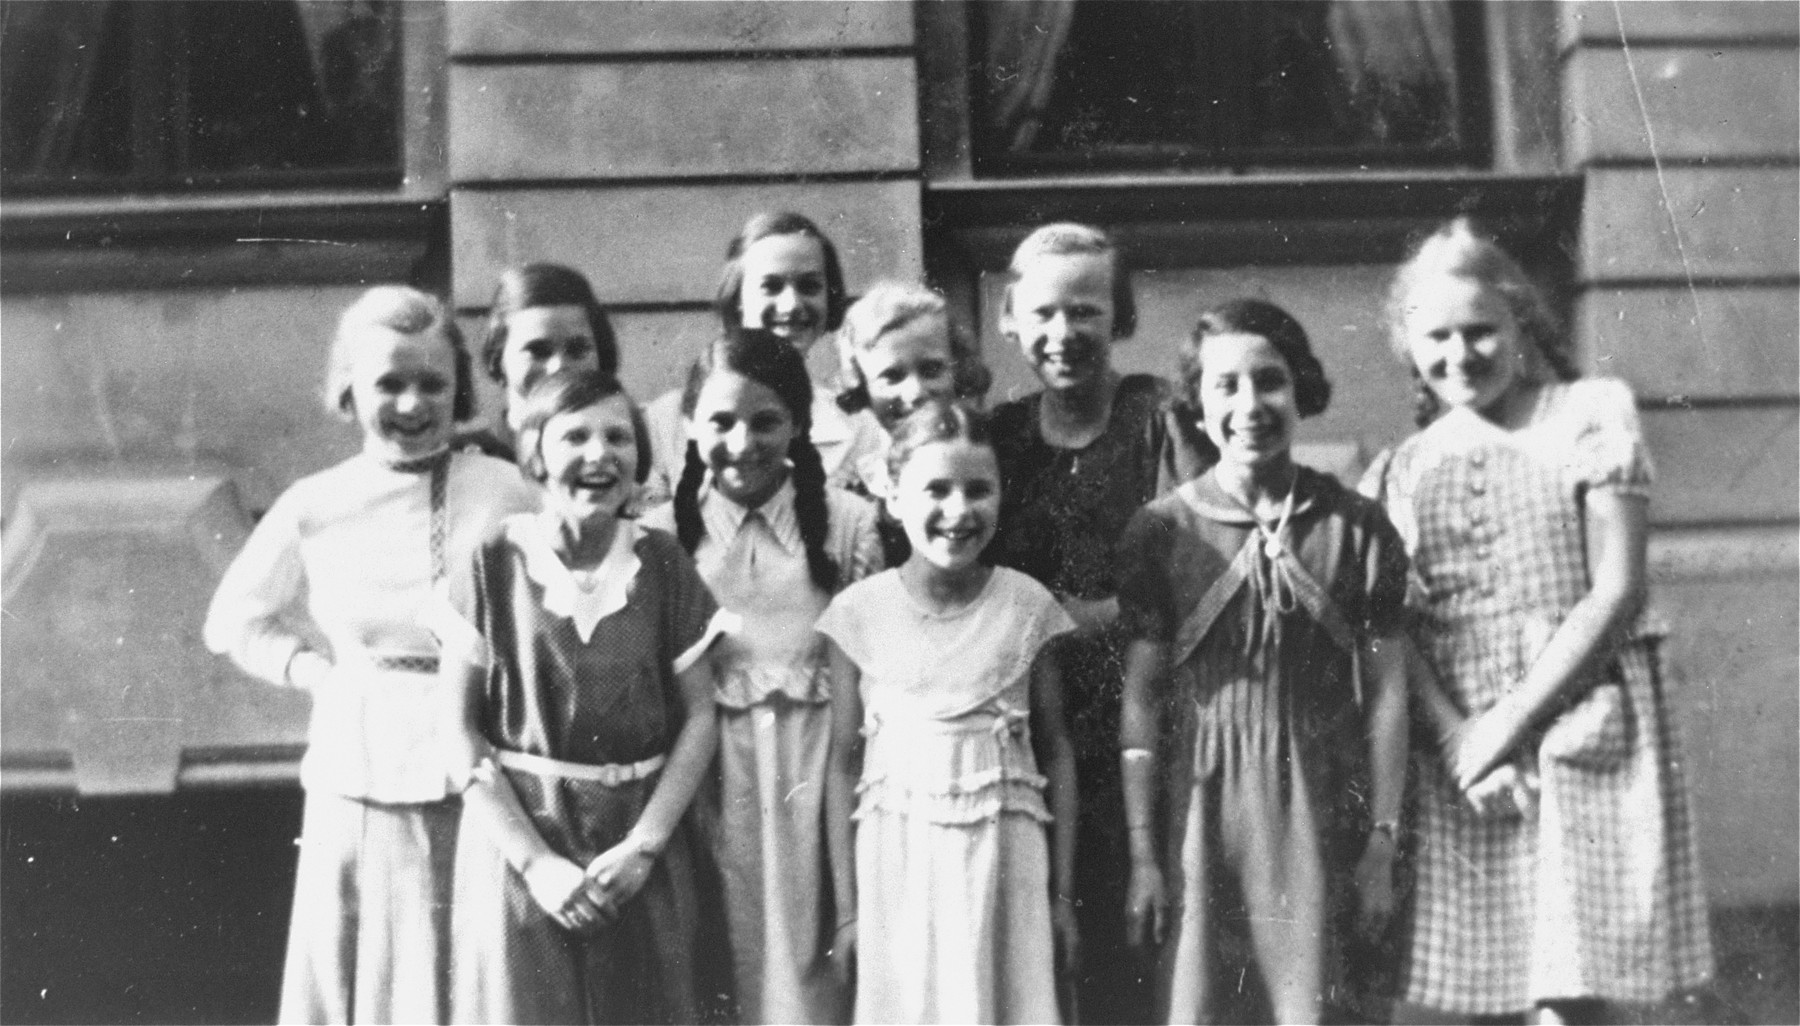 Group portrait of Jewish girls in Leipzig, Germany.

Among those pictured is Berta Rosenhein Hertz.